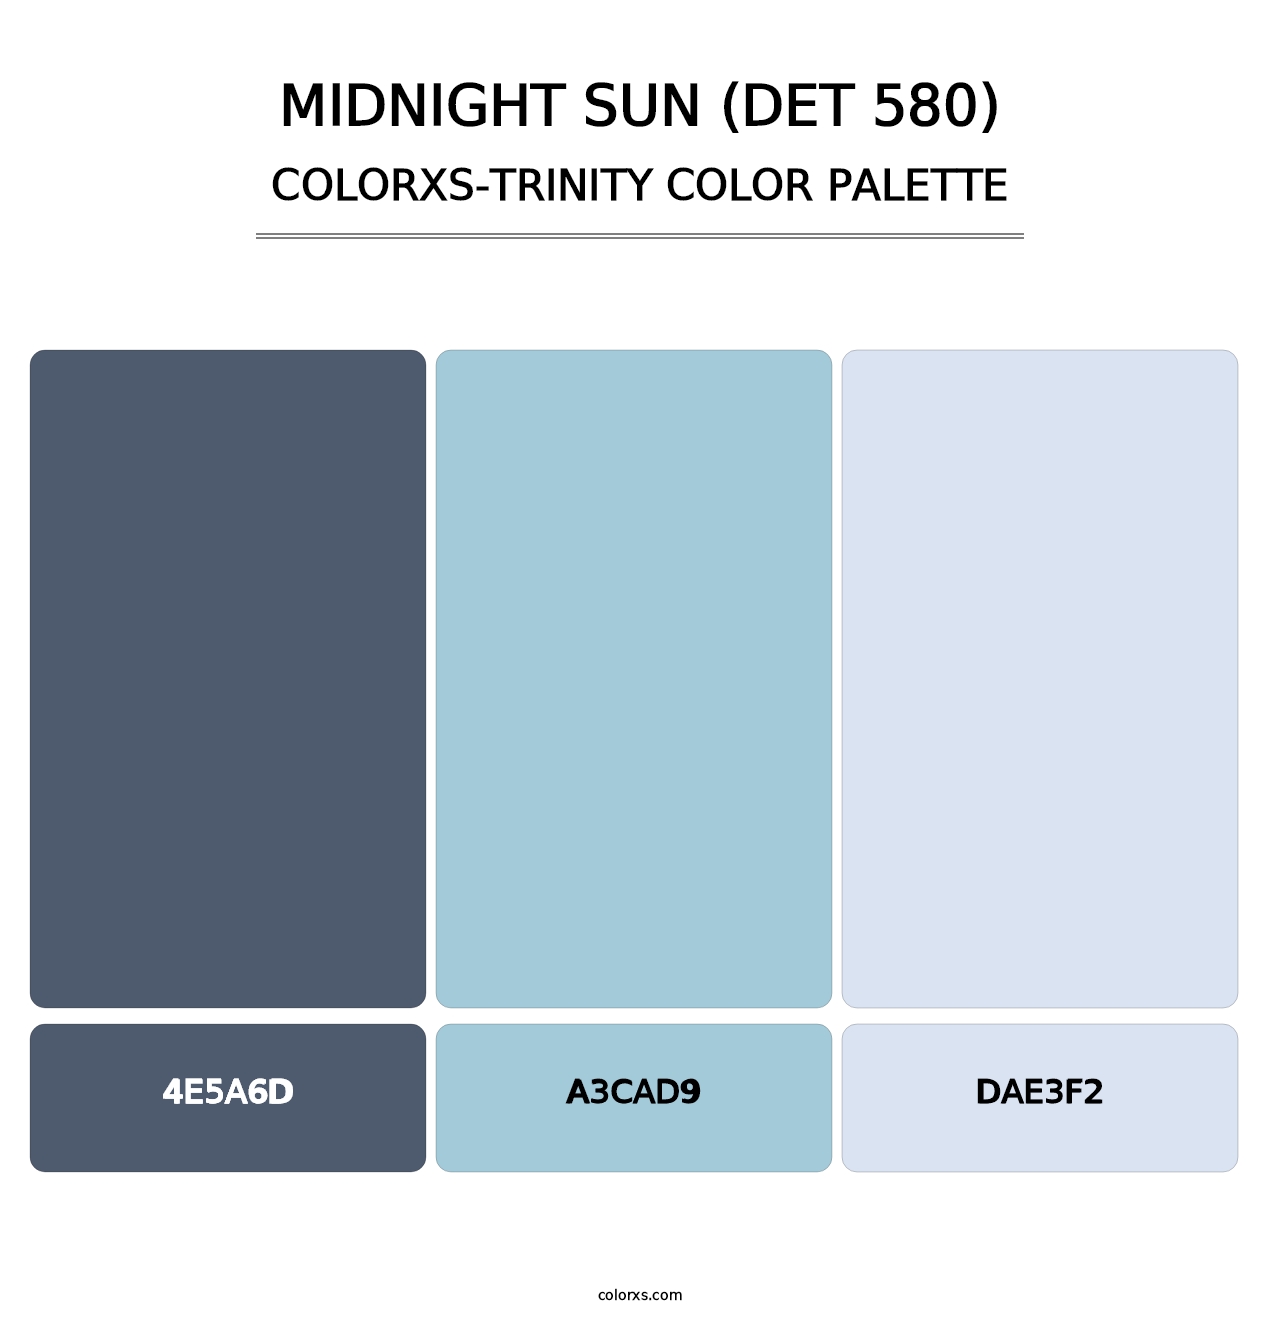 Midnight Sun (DET 580) - Colorxs Trinity Palette